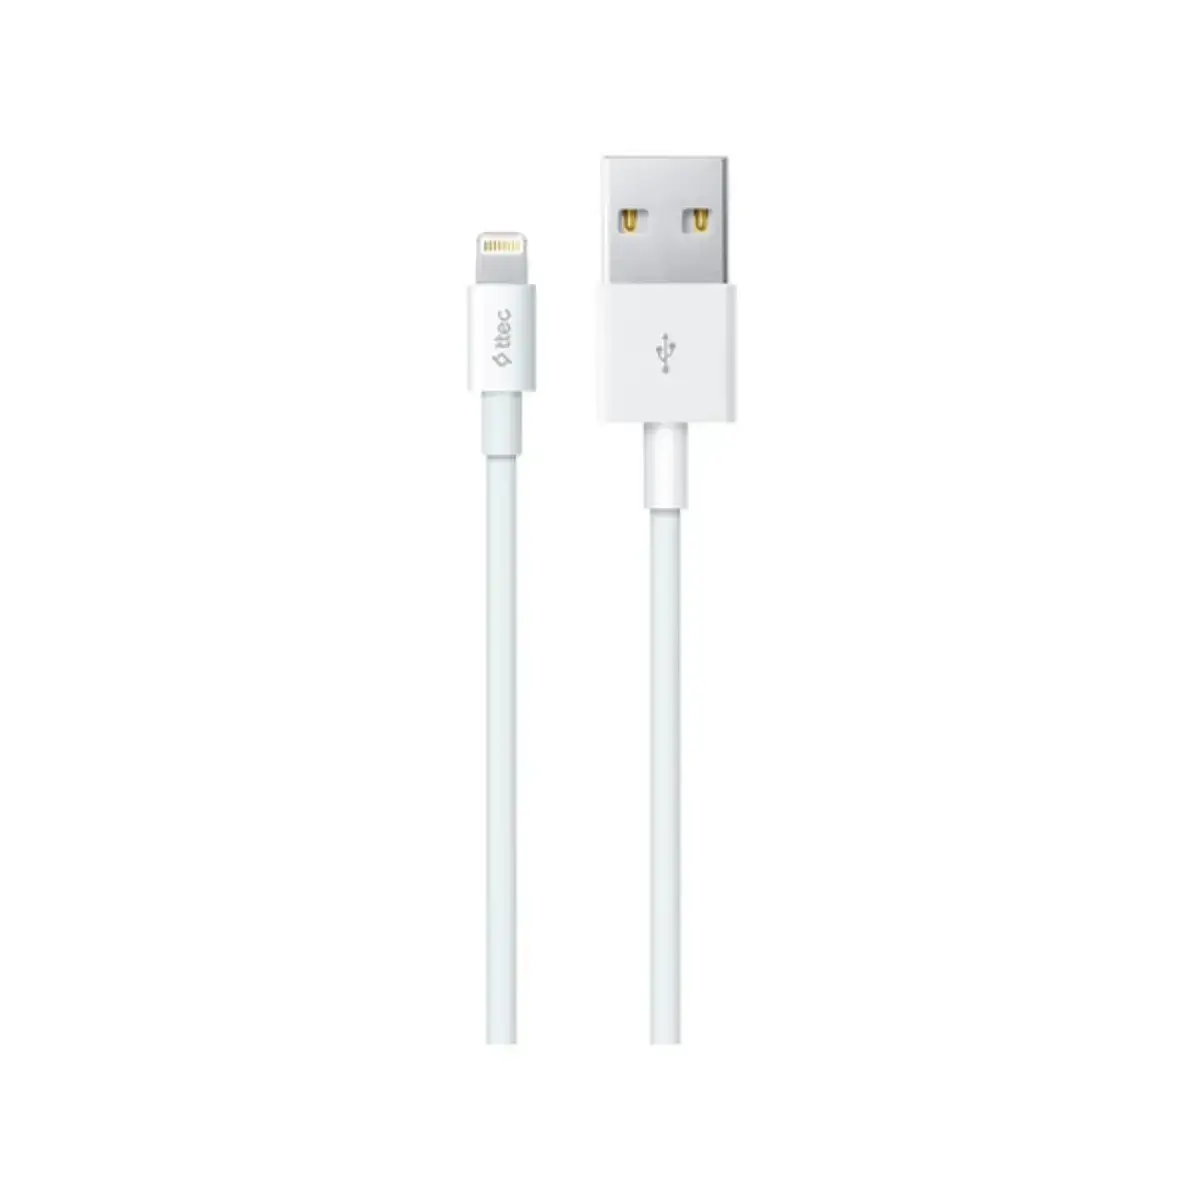 Ttec Apple Lightning Sarj ve Data Kablosu 1M Beyaz 23